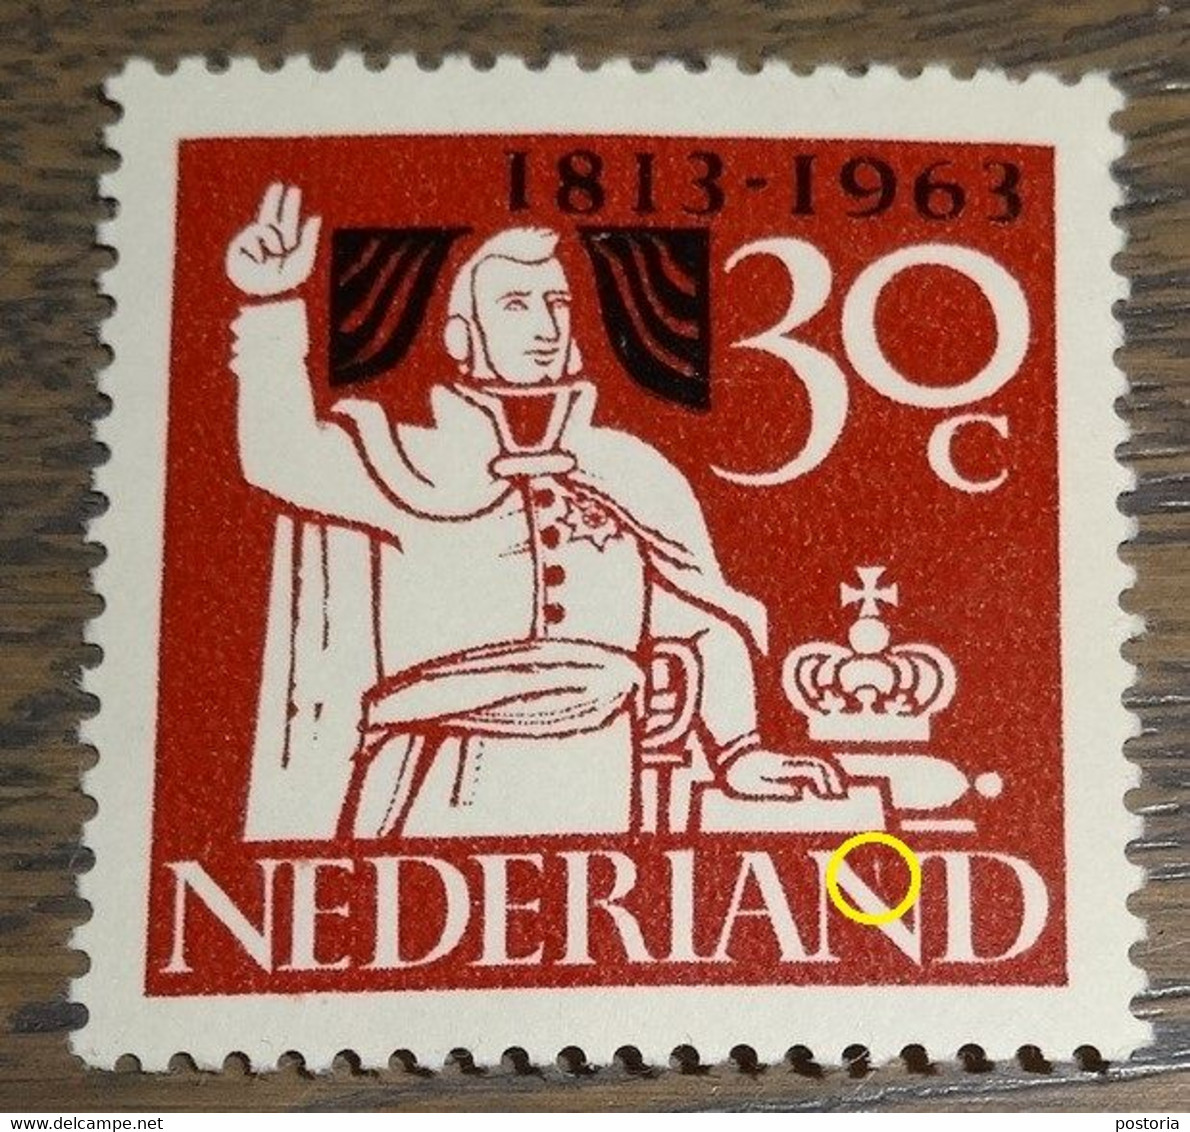 Nederland - MAST - 810 PM - 1963 - Plaatfout - Postfris - Wit Streepje In 2e N Van NEDERLAND - Errors & Oddities